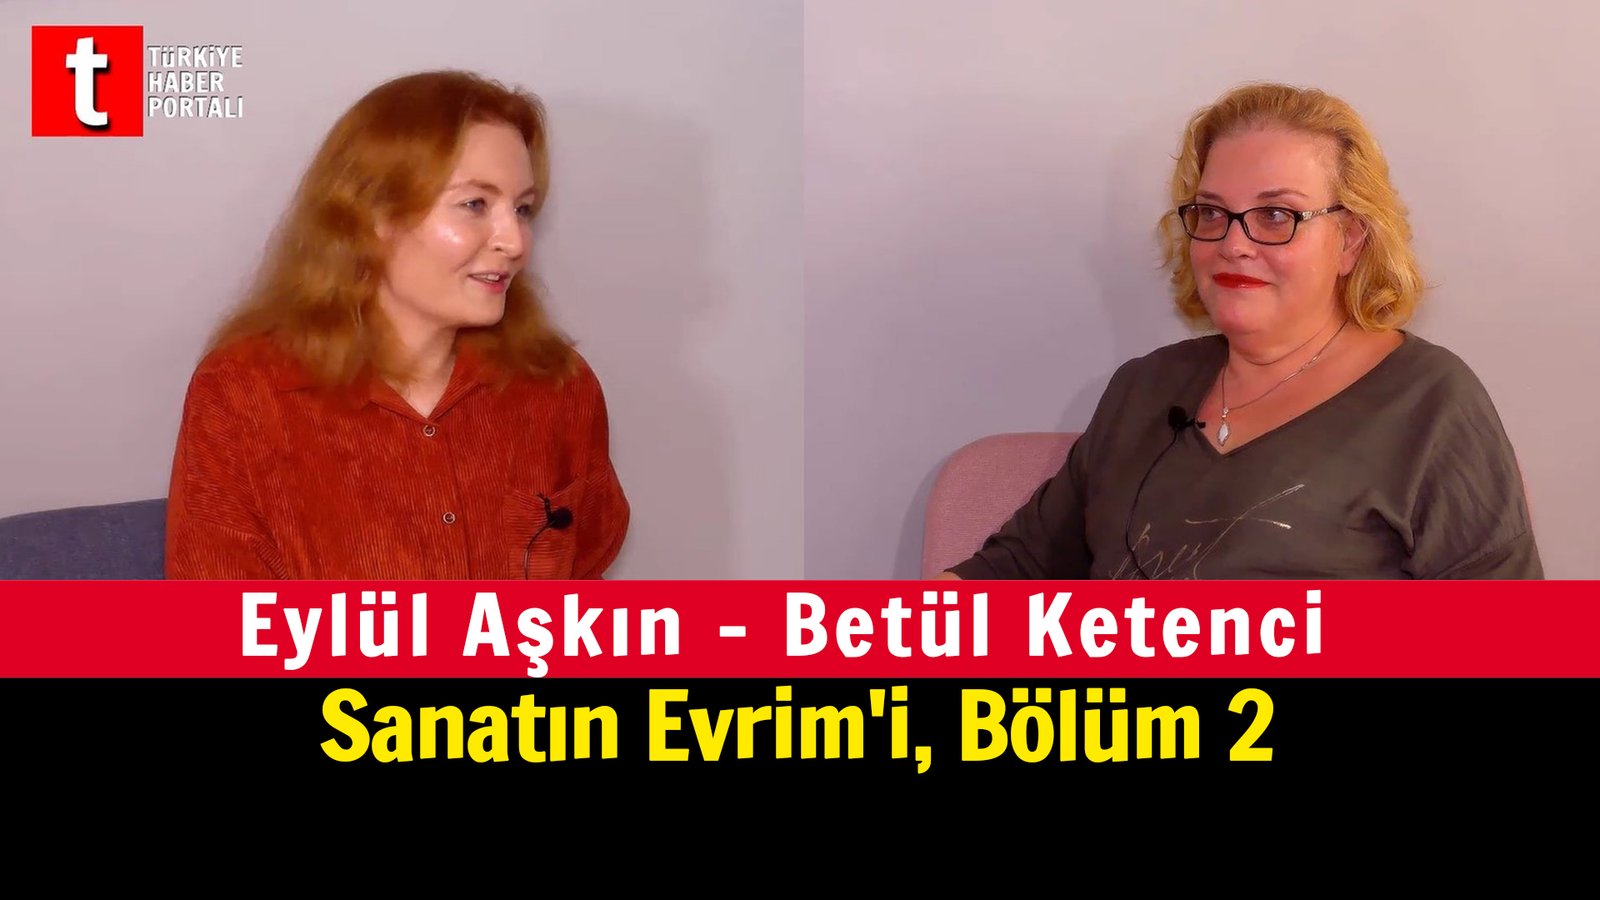 Betül Ketenci ''we Are Full Until The End Of 2026!'' Eylül Aşkın Sanatın Everim'i Interview